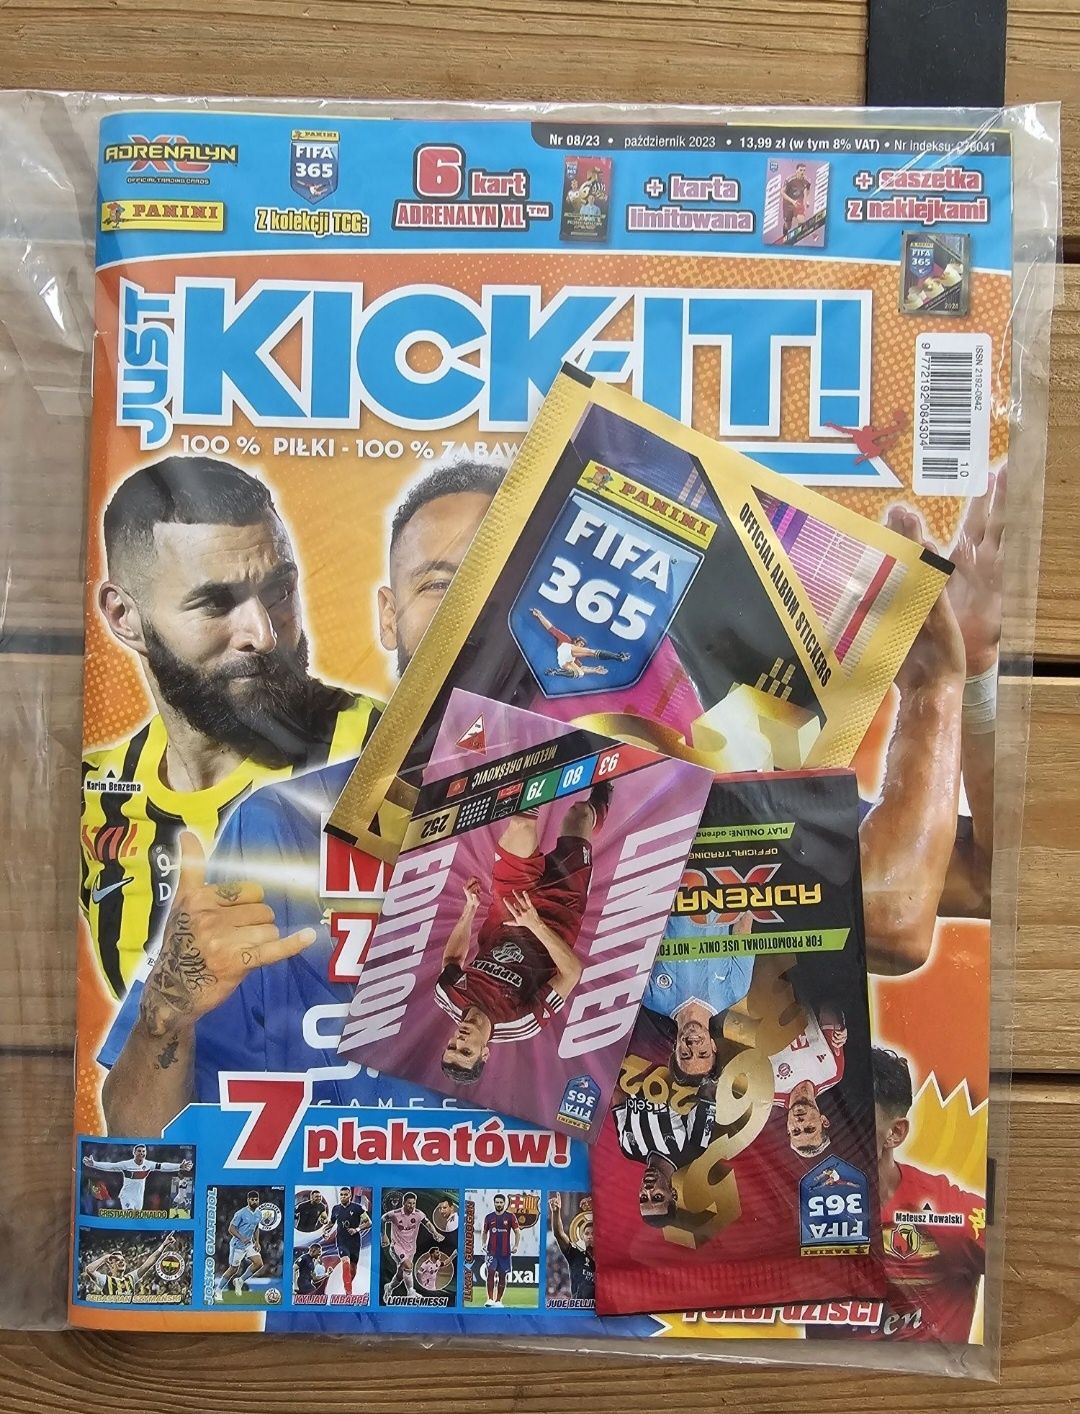 Just kick-it -magazyn